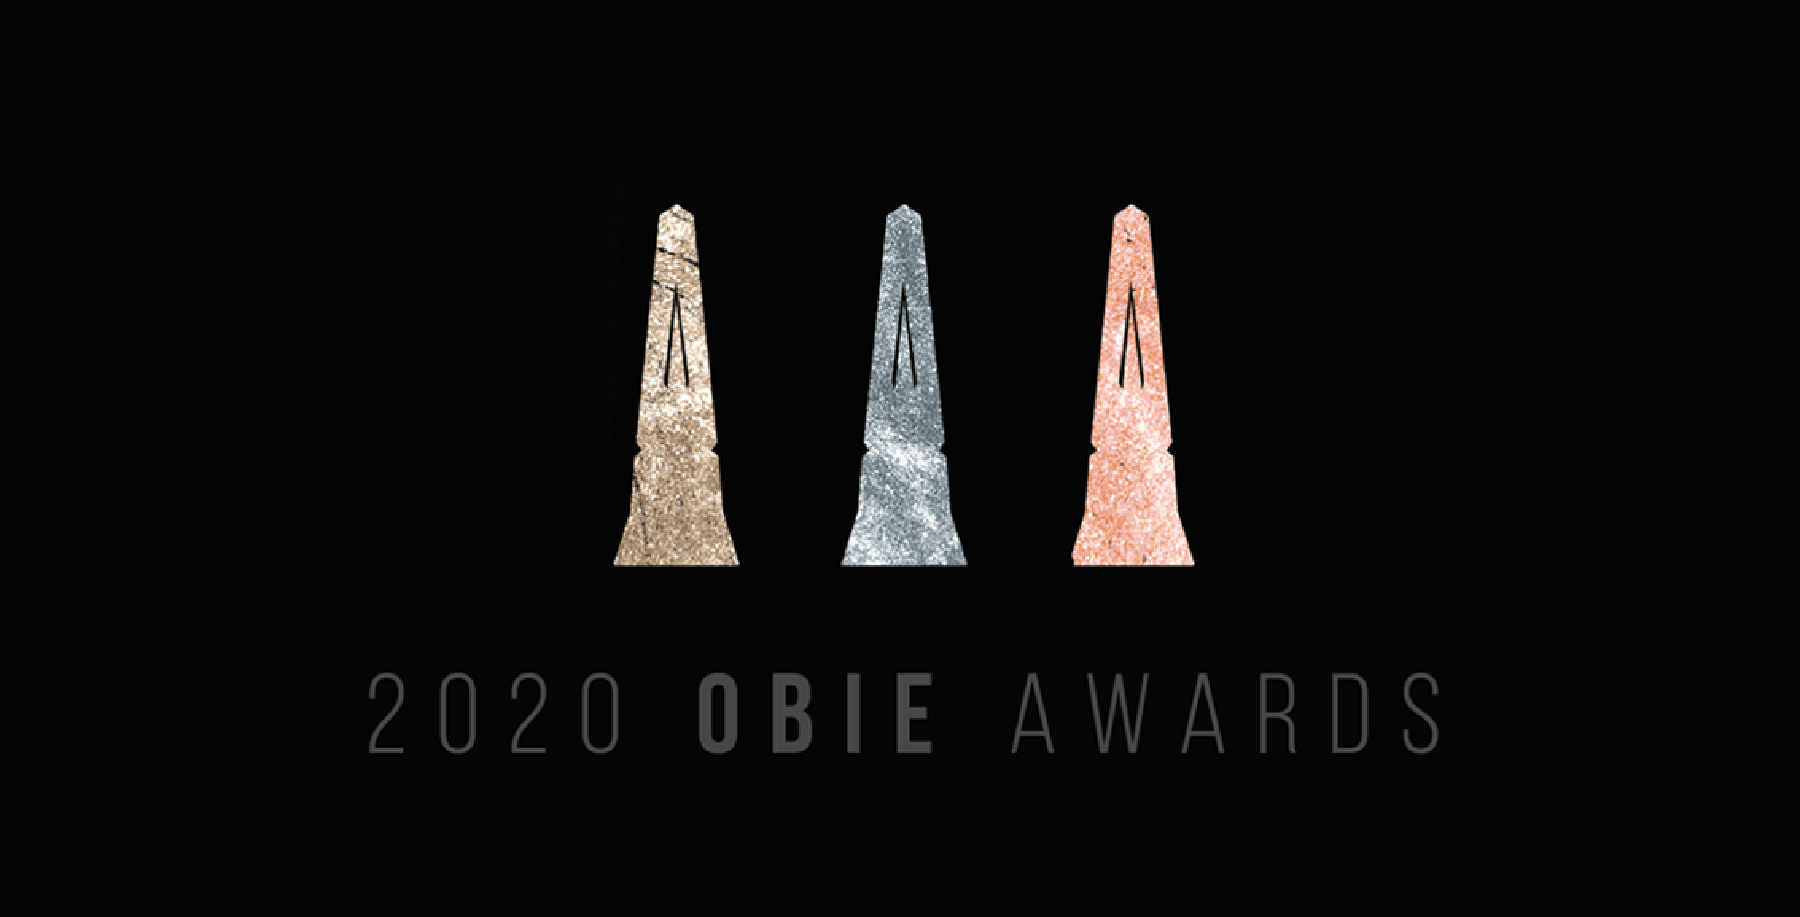 ECP is a 6x finalist in 2020 OBIE Awards